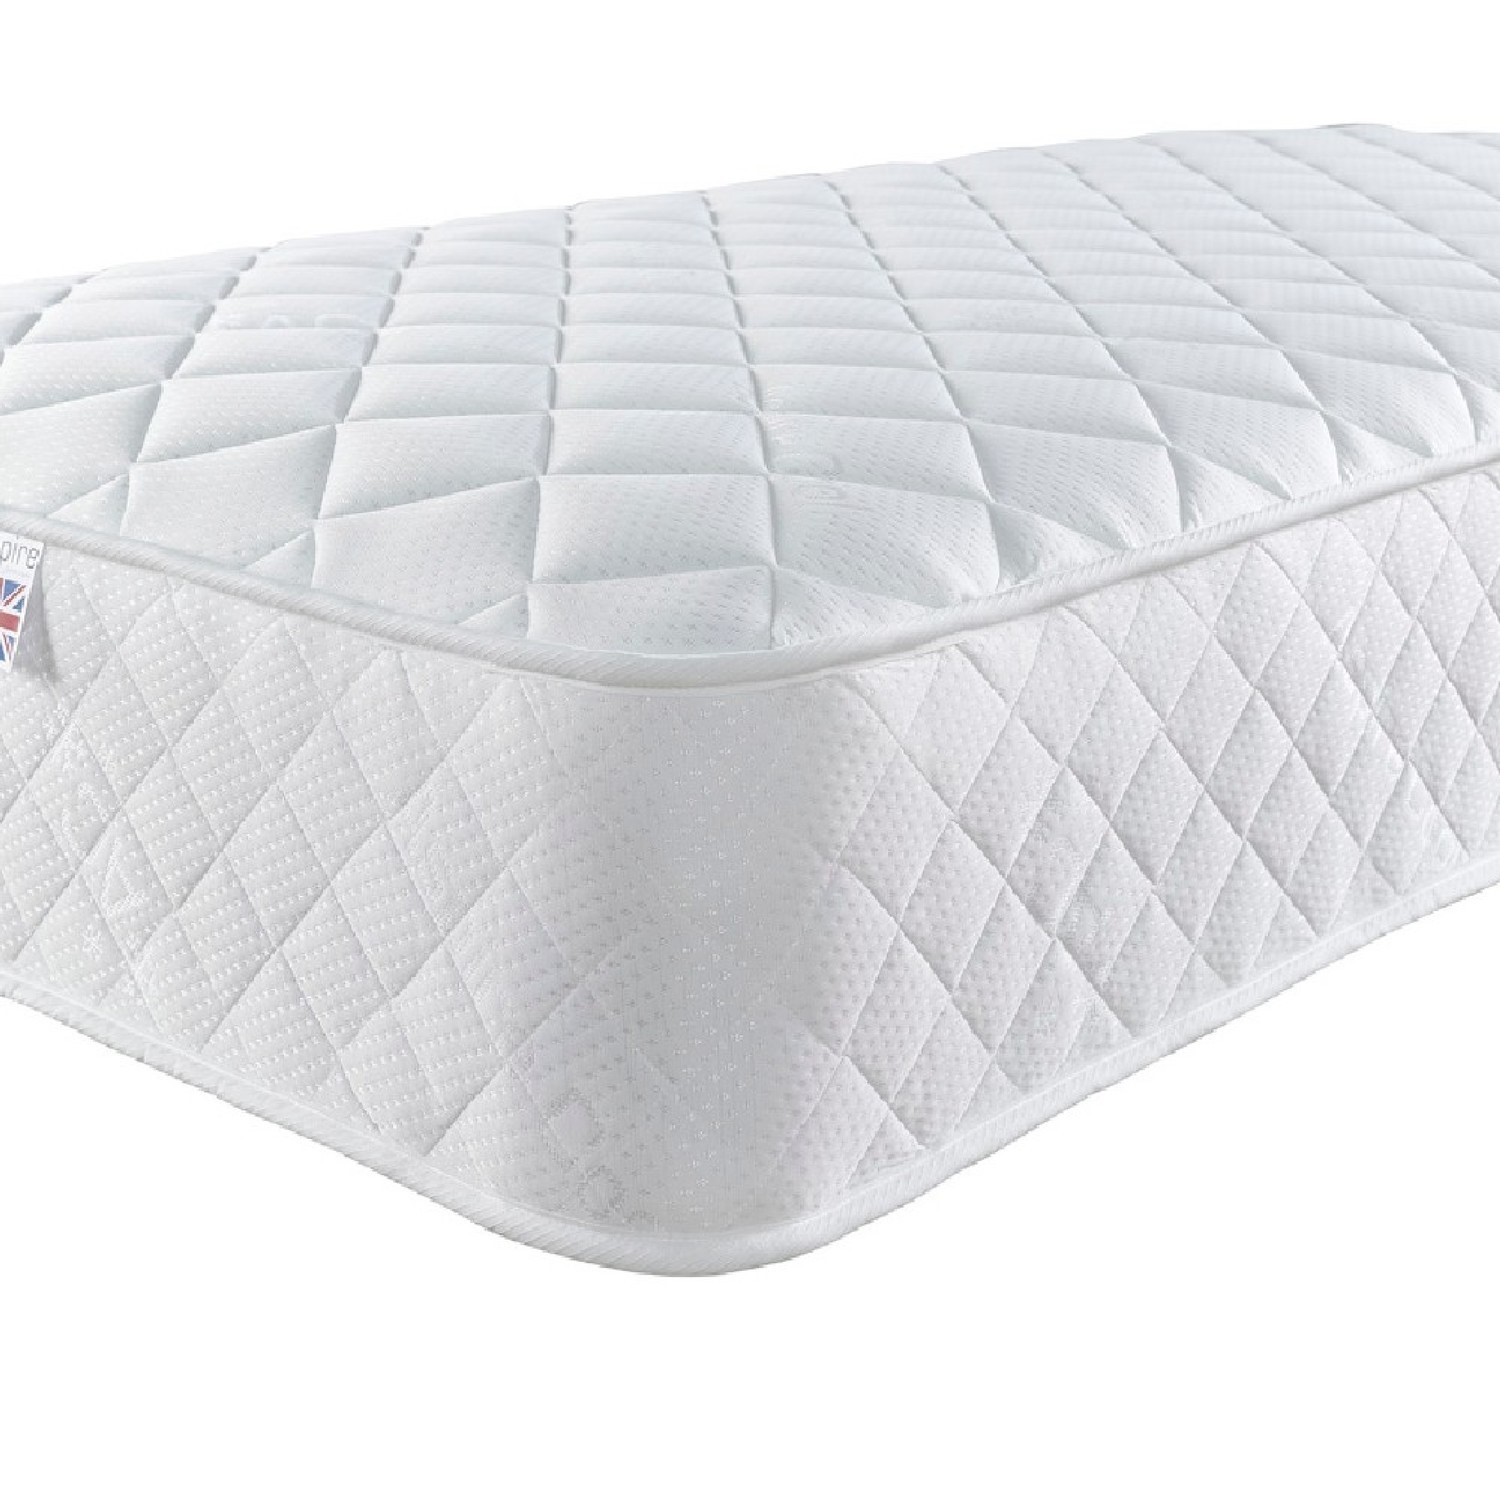 Aspire furniture comfort eco foam free mattress - small double